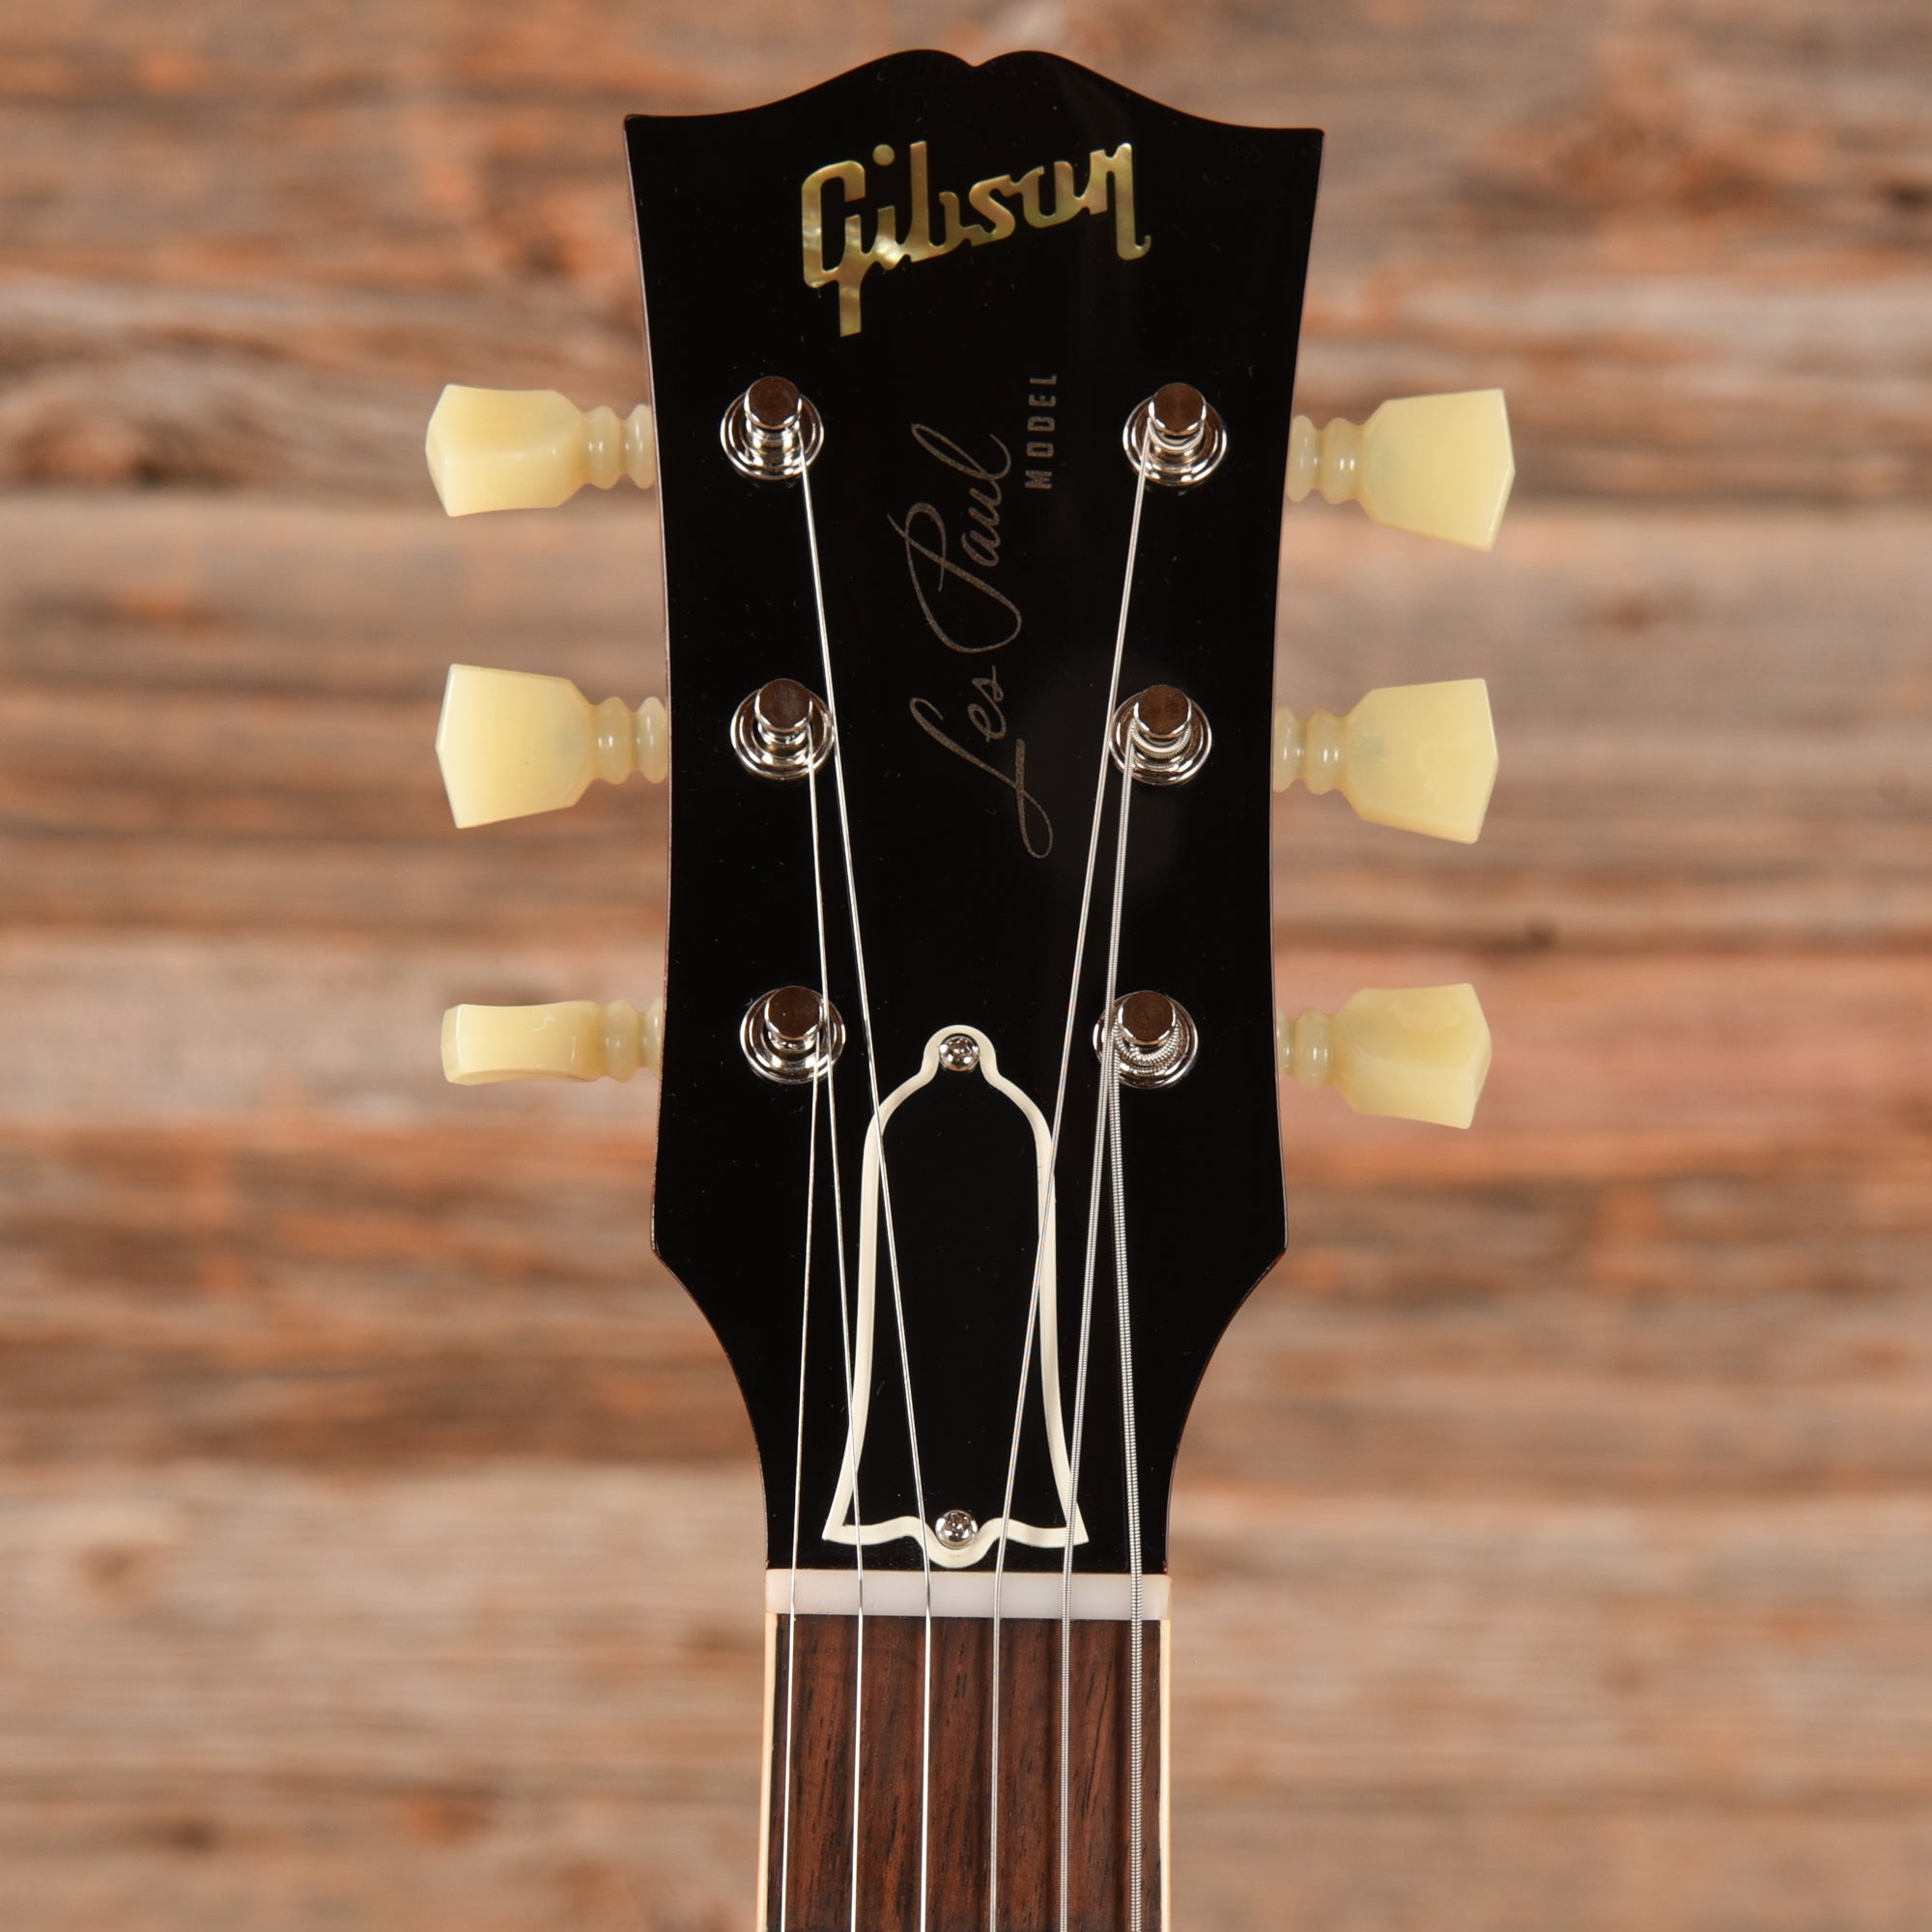 Gibson Custom 60 Les Paul Standard Translucent Cherry 2021 LEFTY